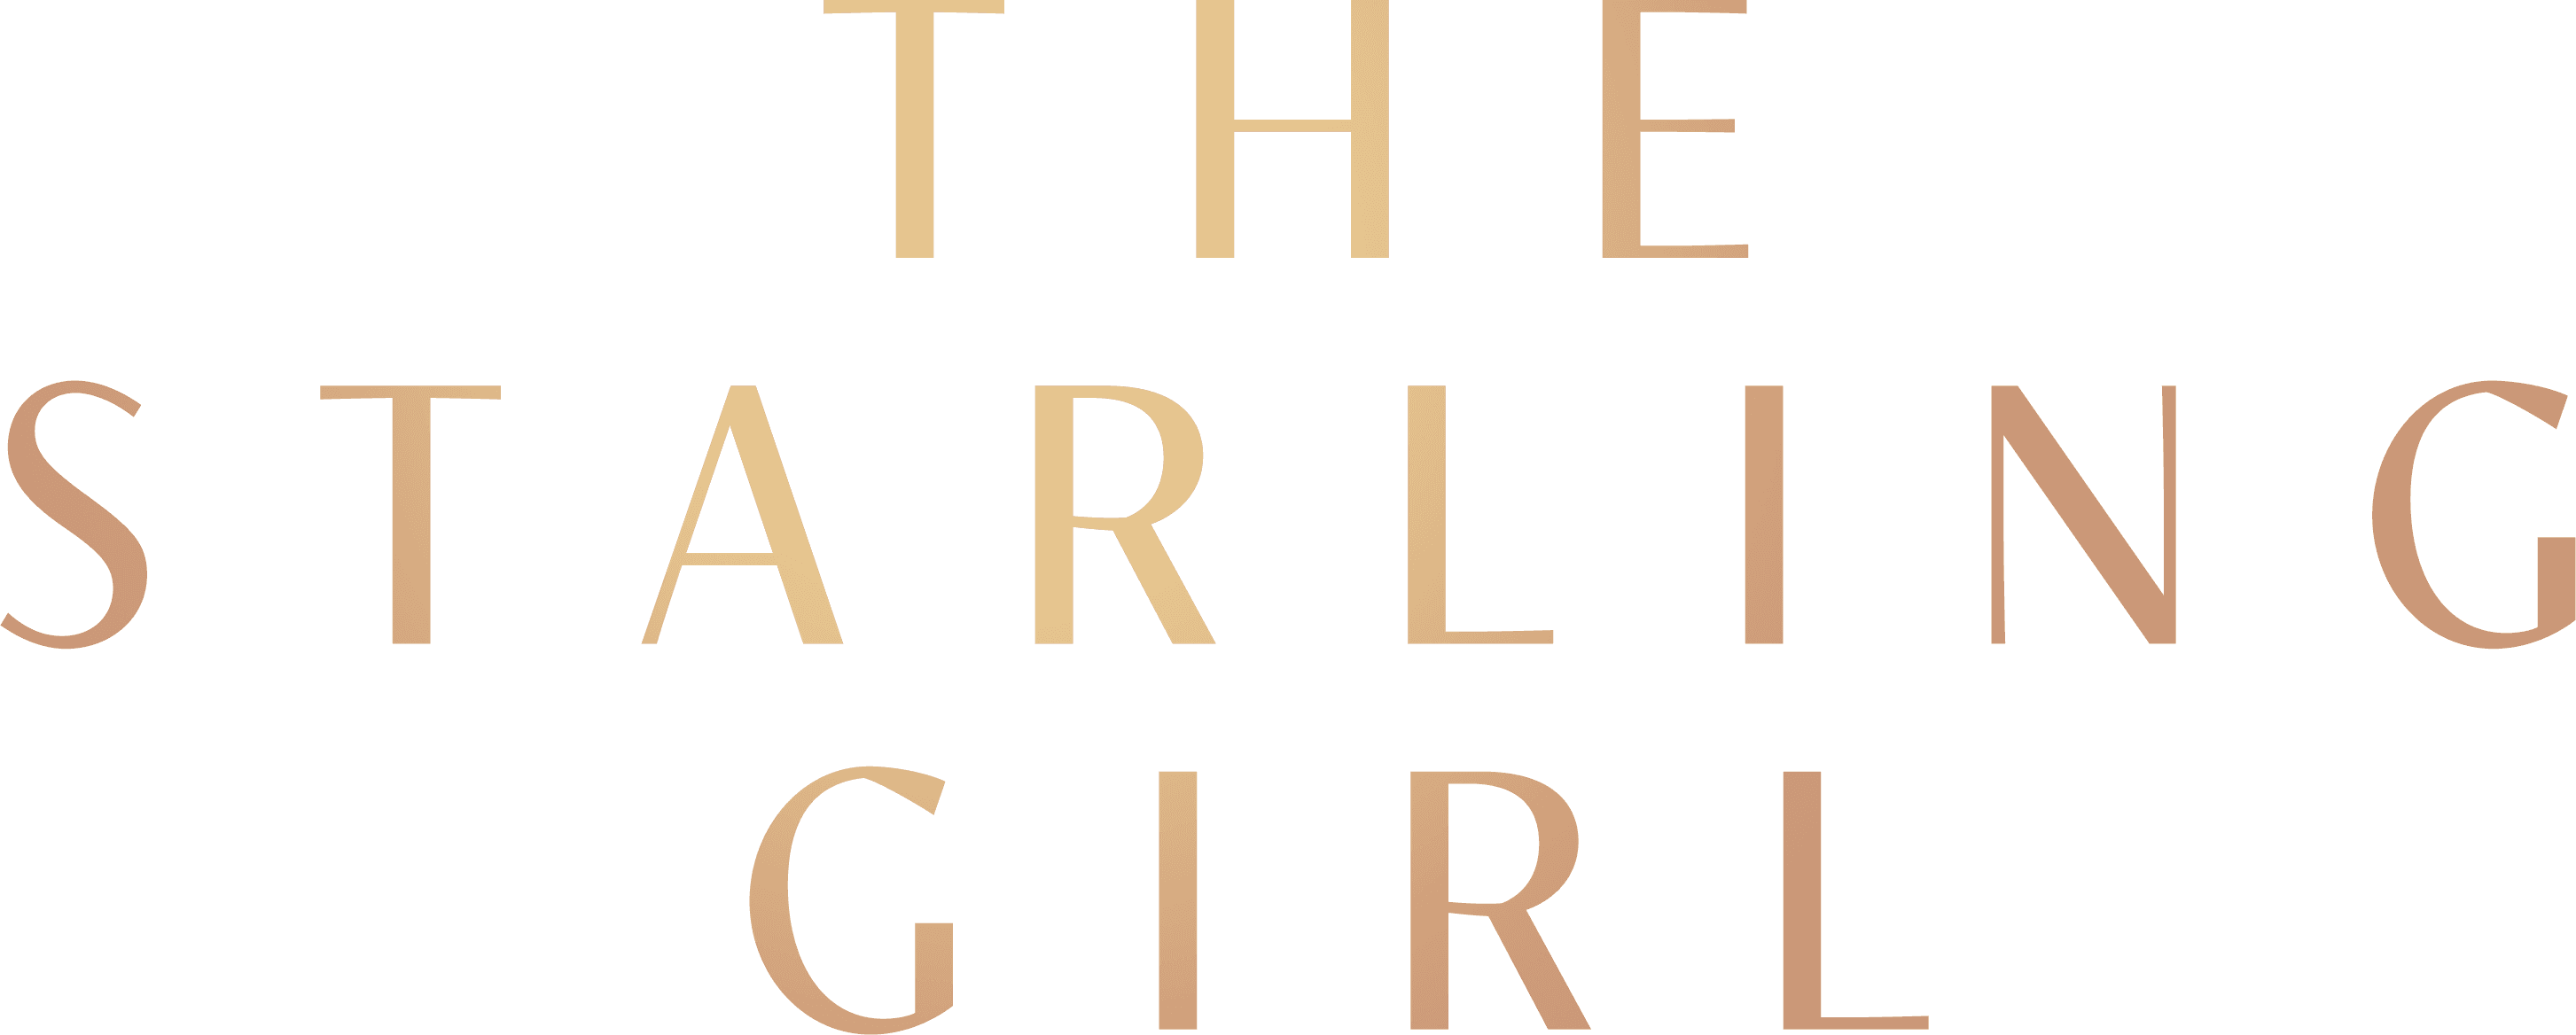 The Starling Girl logo